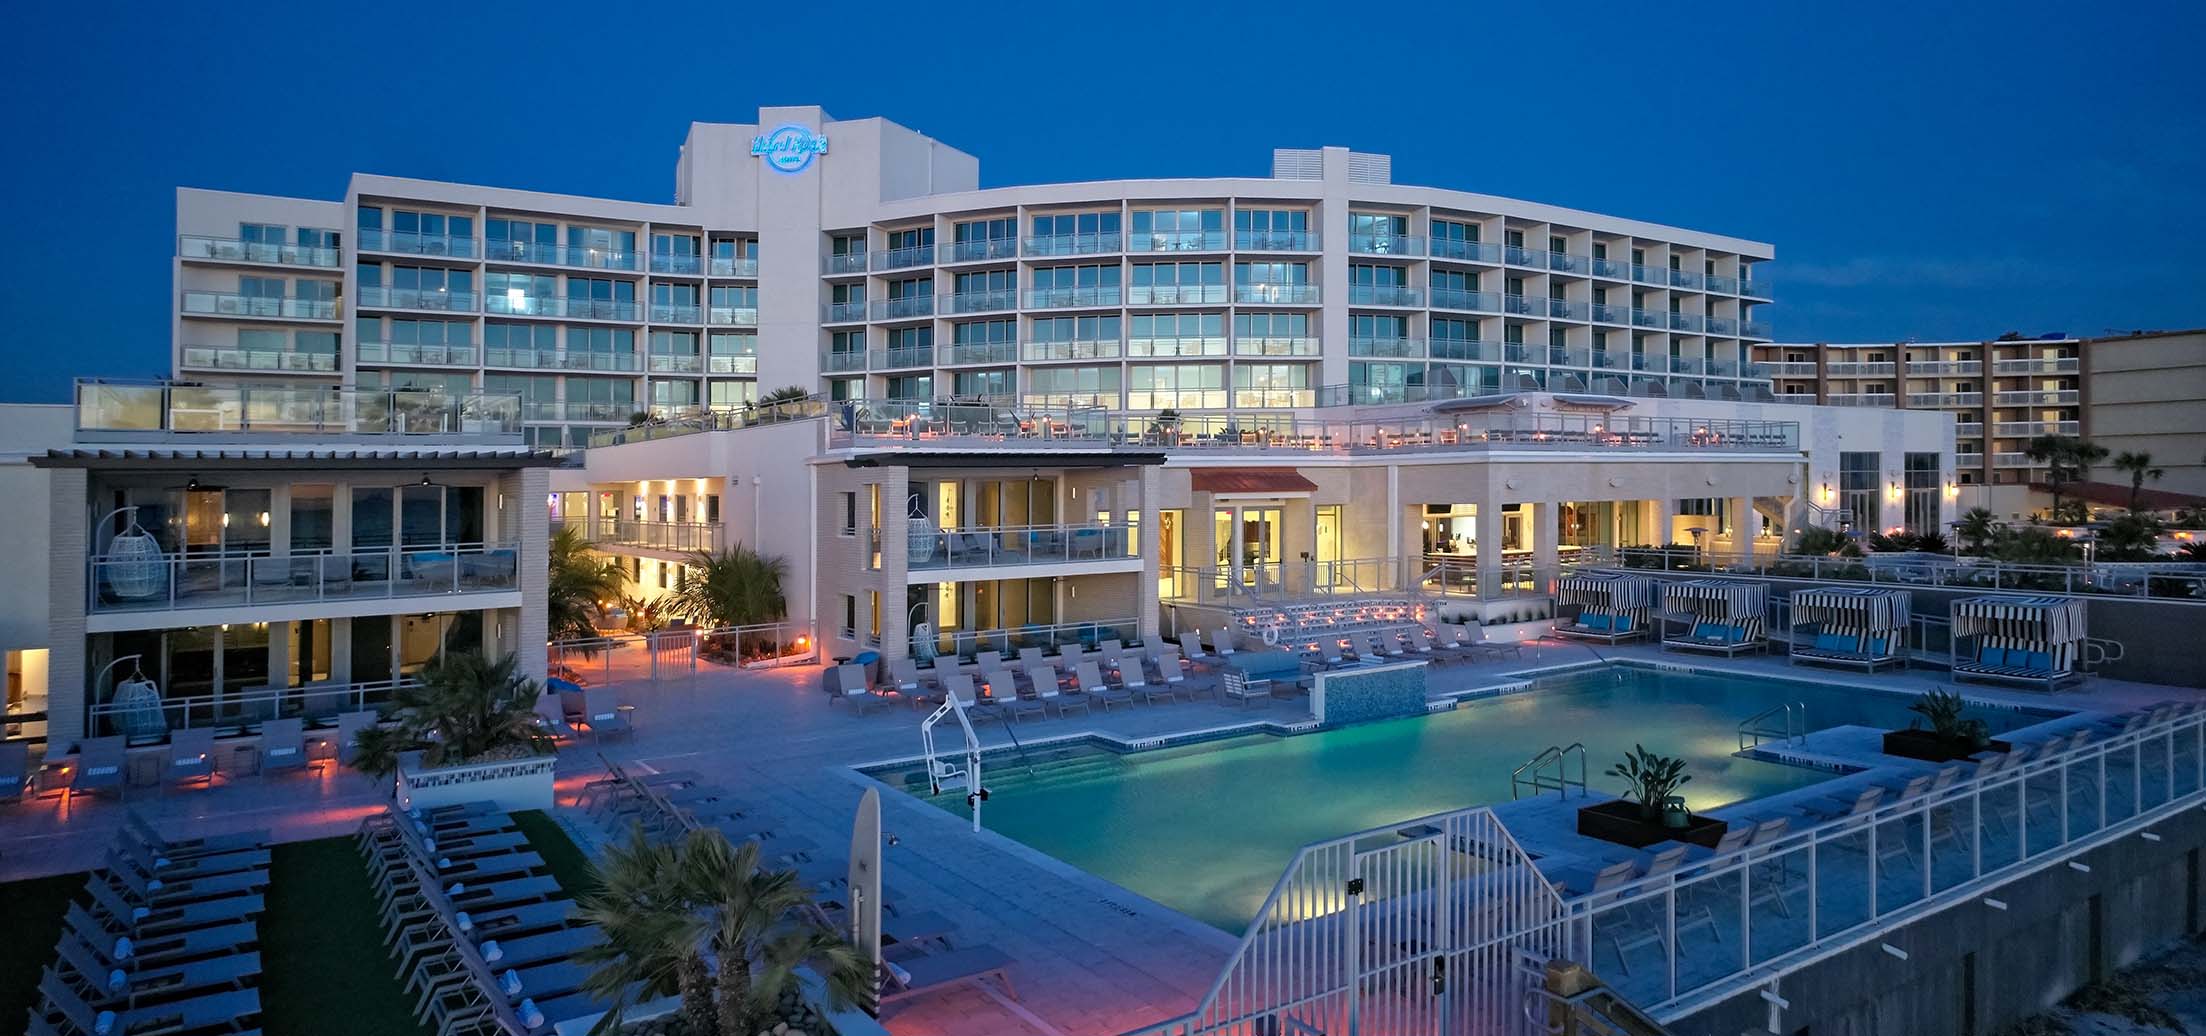 Photo of Hard Rock Hotel Daytona Beach